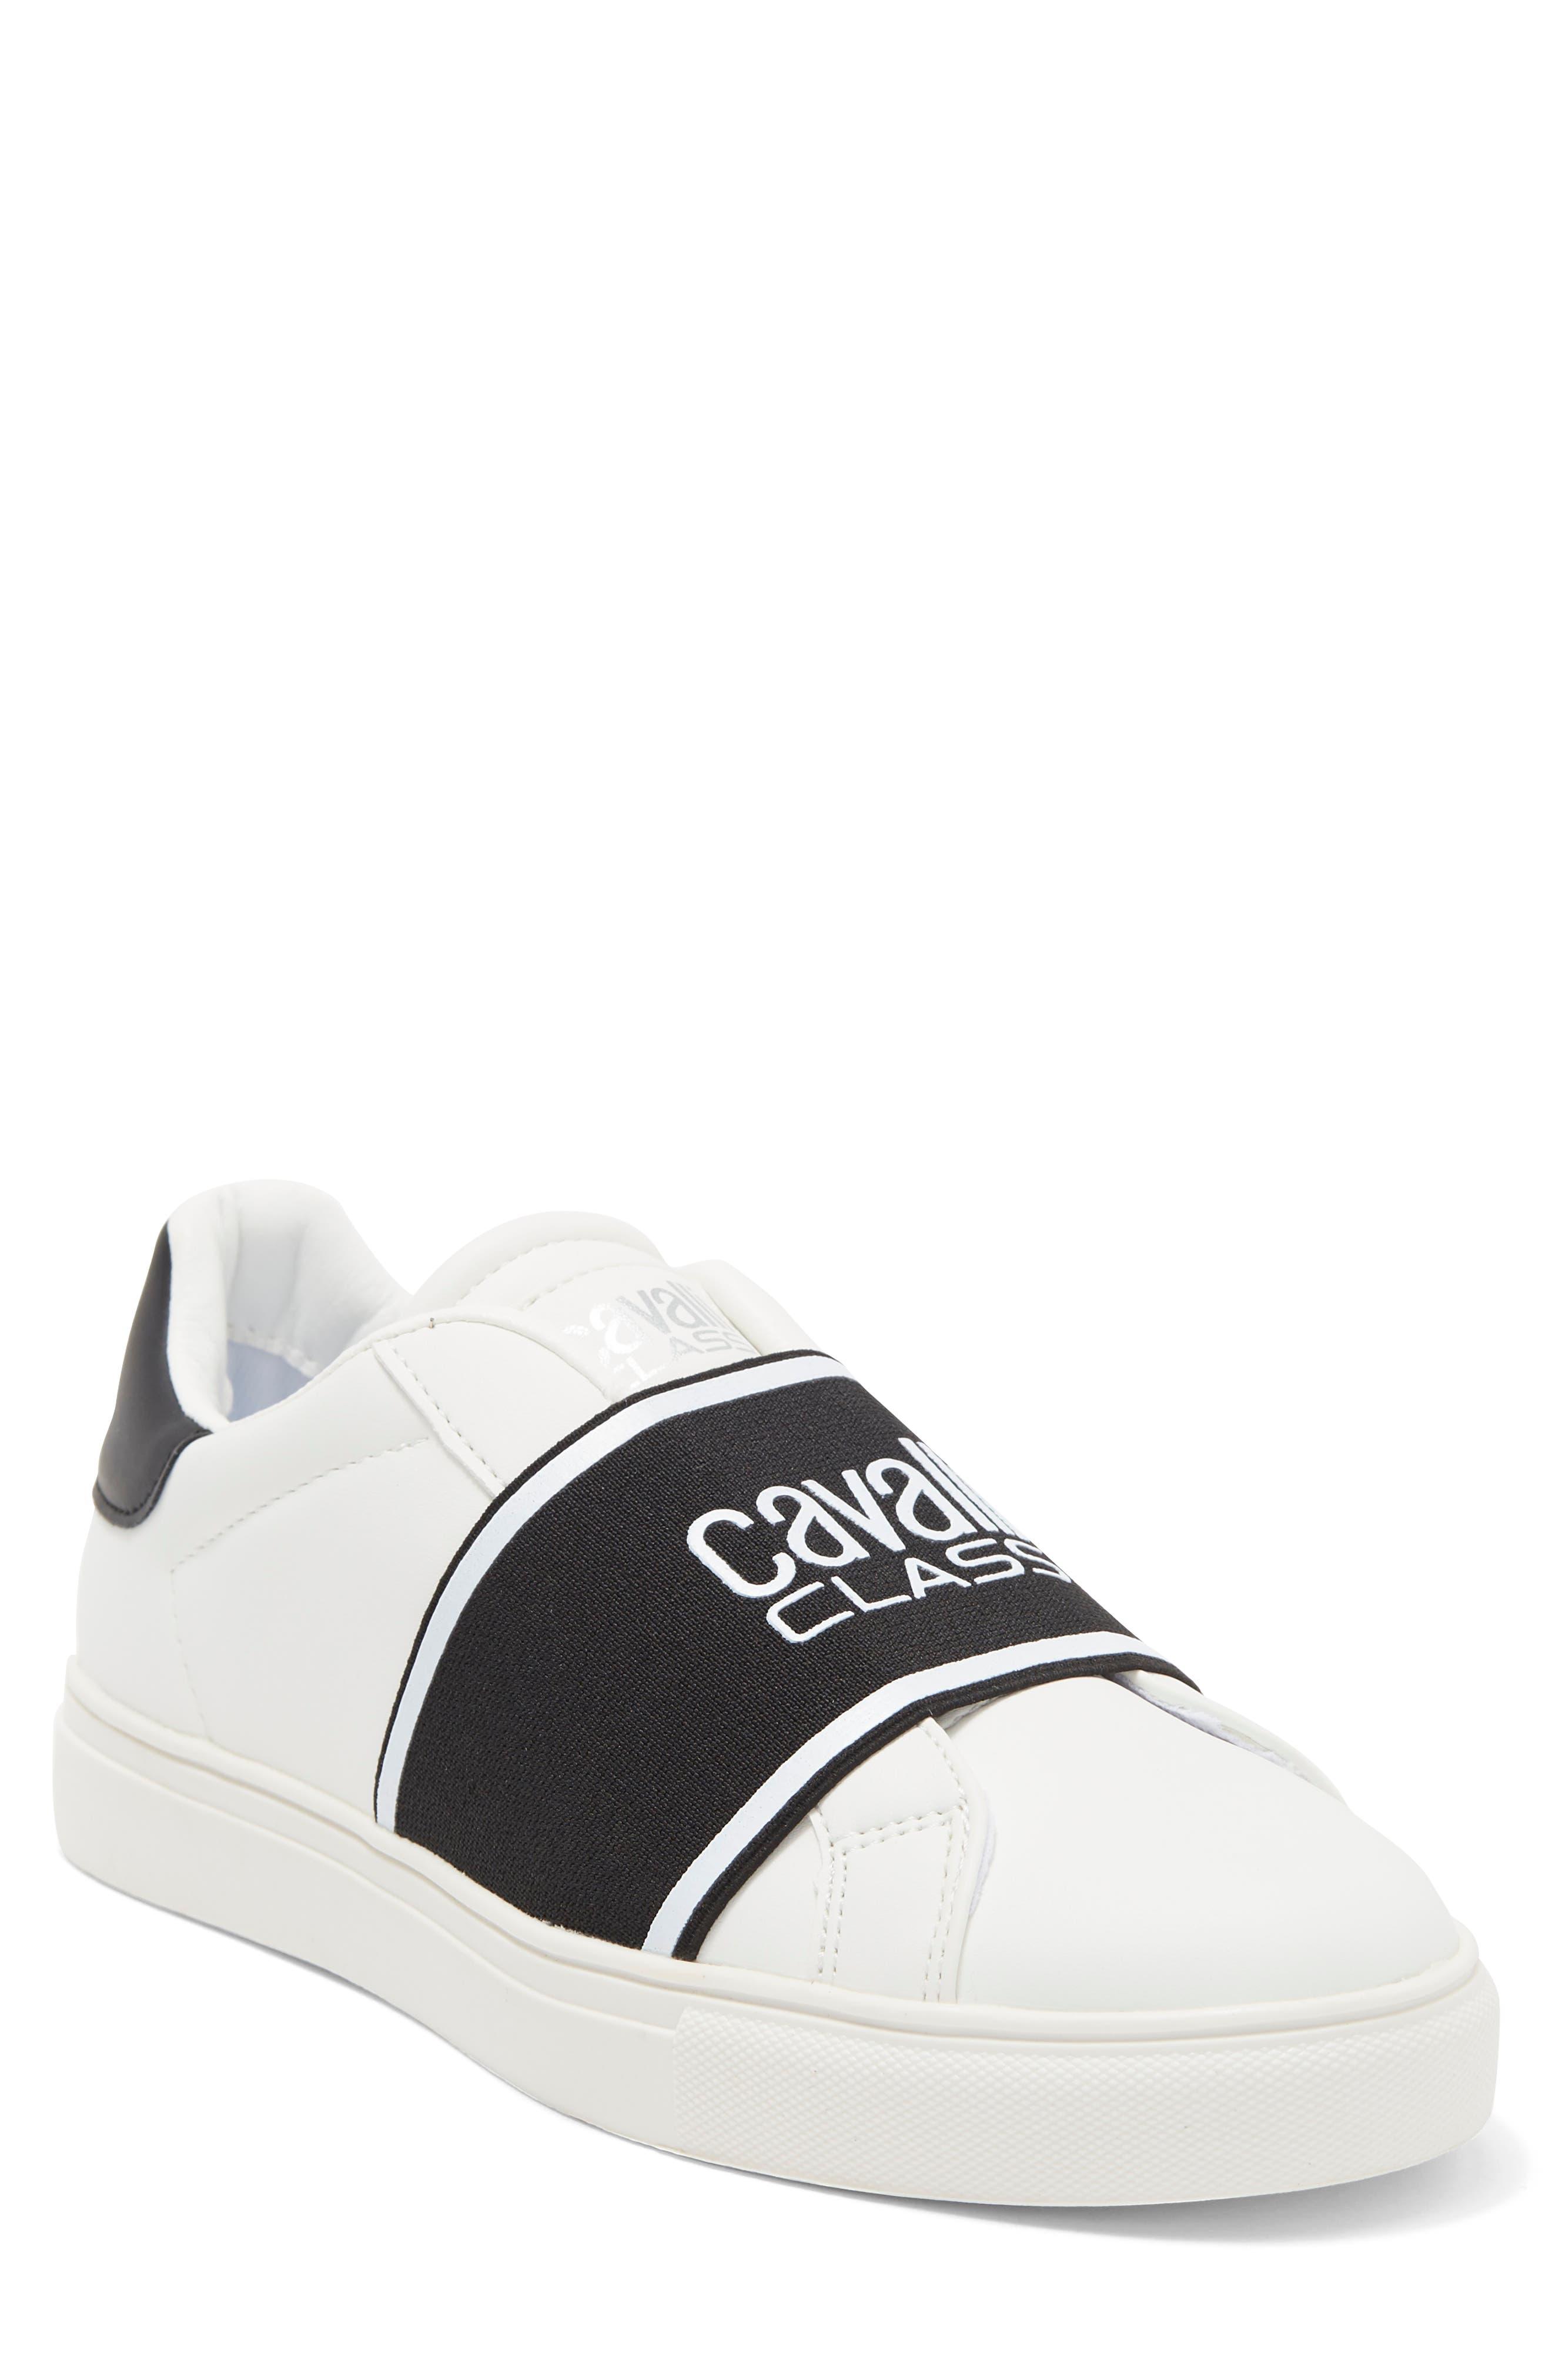 Roberto Cavalli Logo Strap Tennis Shoe in White | Lyst